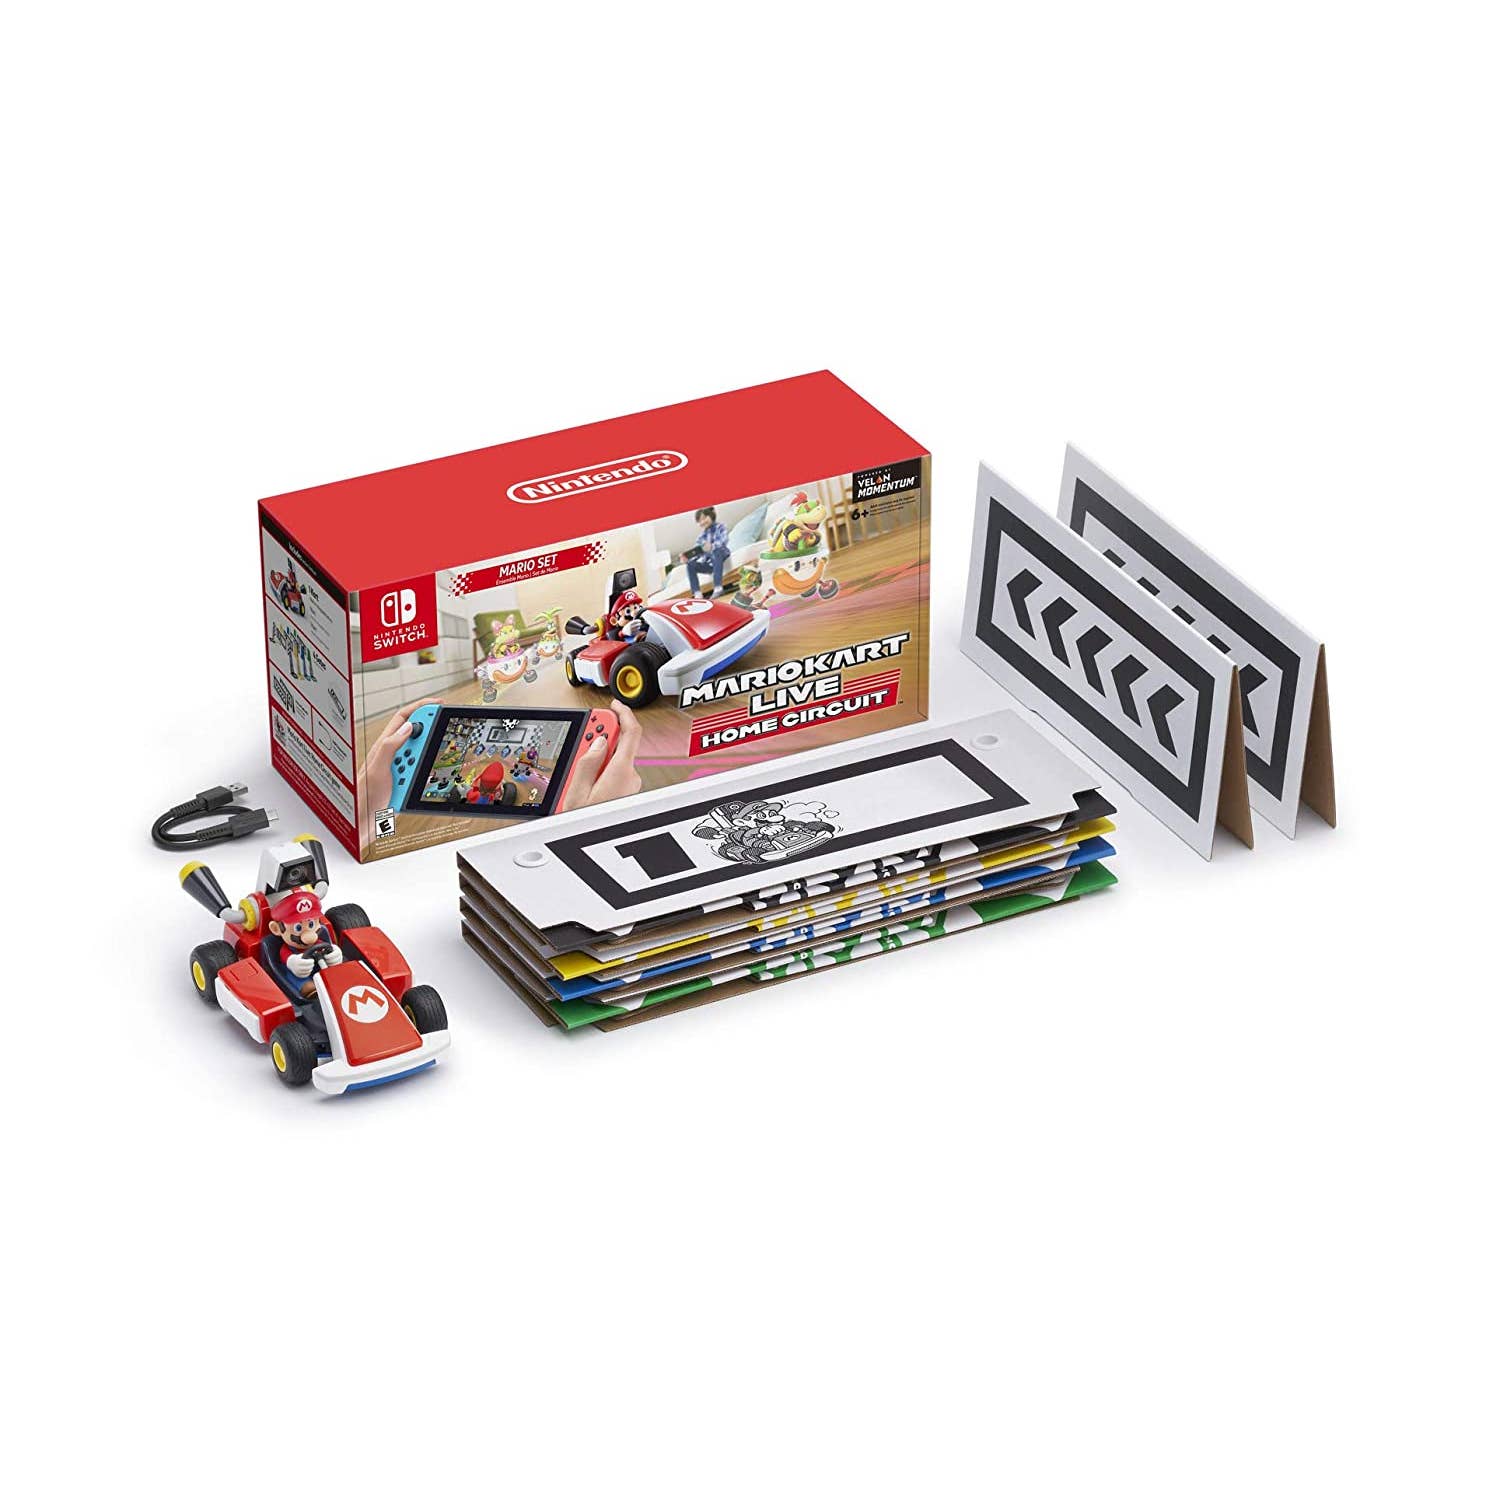 Nintendo- HACRRMAAA Mario Kart Live: Home Circuit -Mario Set - Nintendo Switch Mario Set Edition